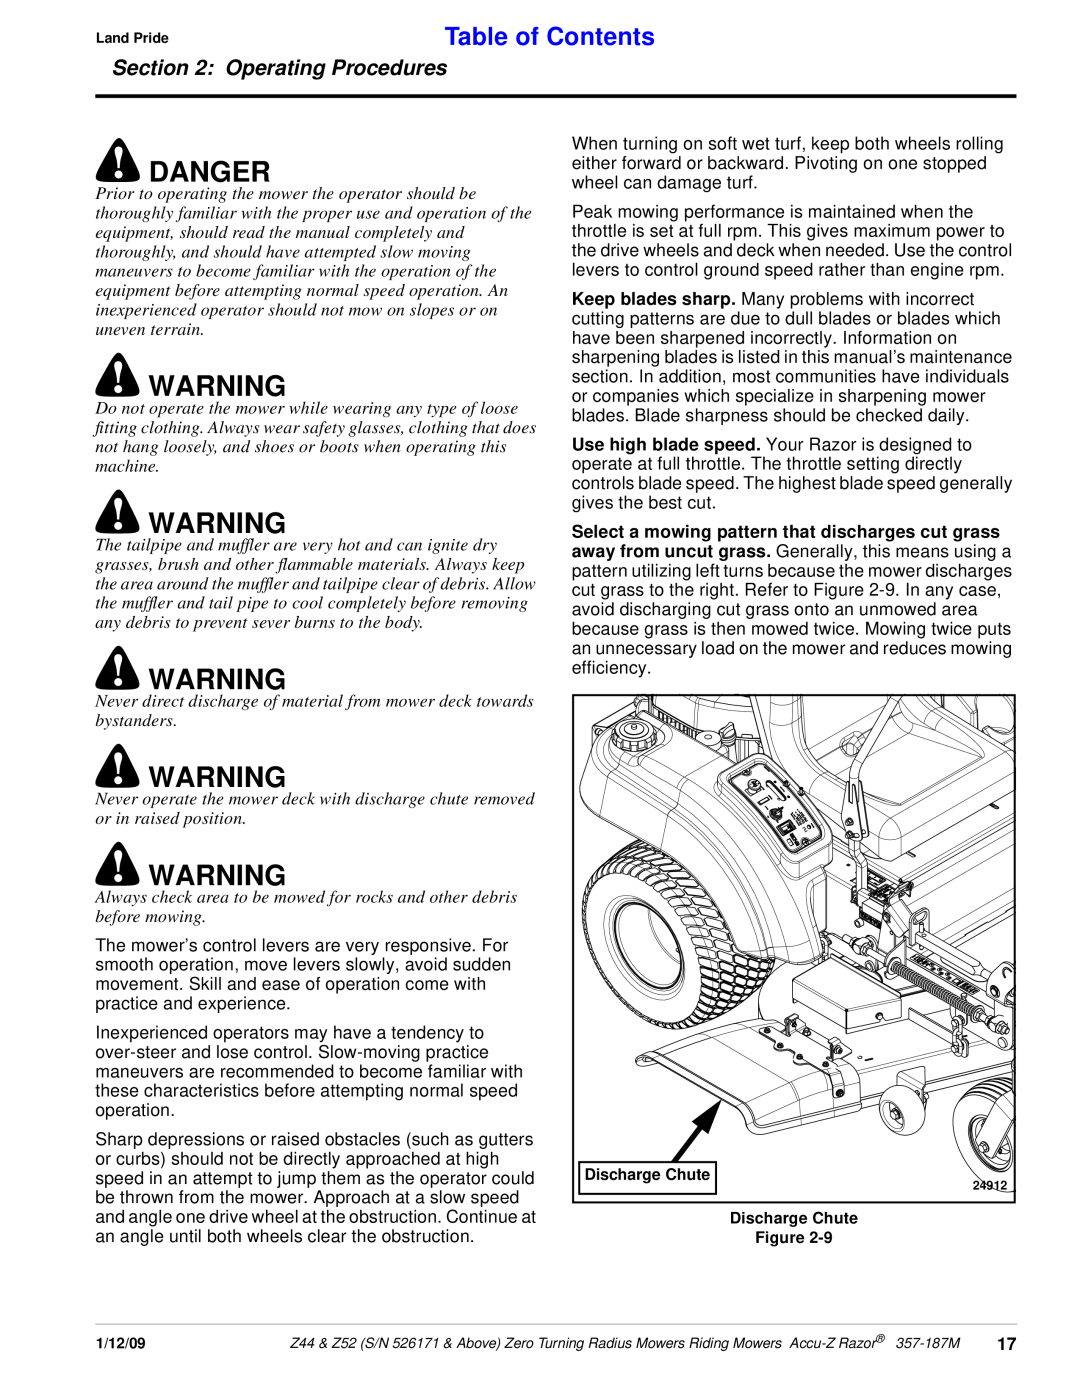 Land Pride 357-187M manual Danger, Land PrideTable of Contents, Operating Procedures 